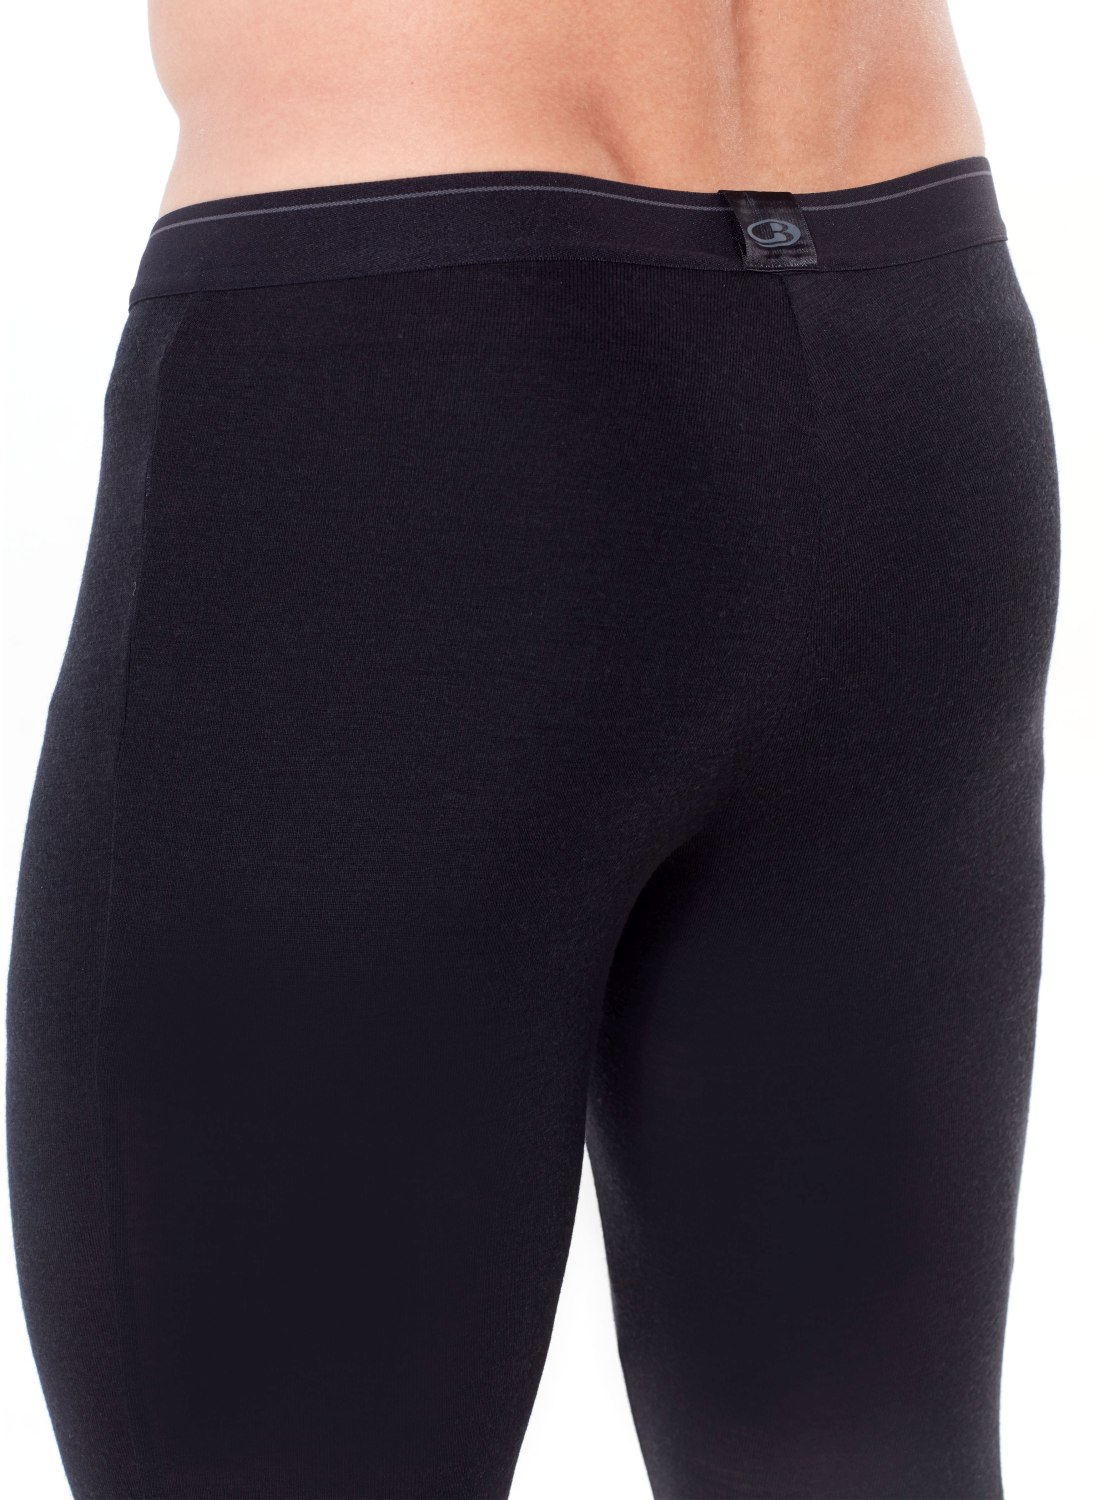 Men’s 3/4 length functional underpants